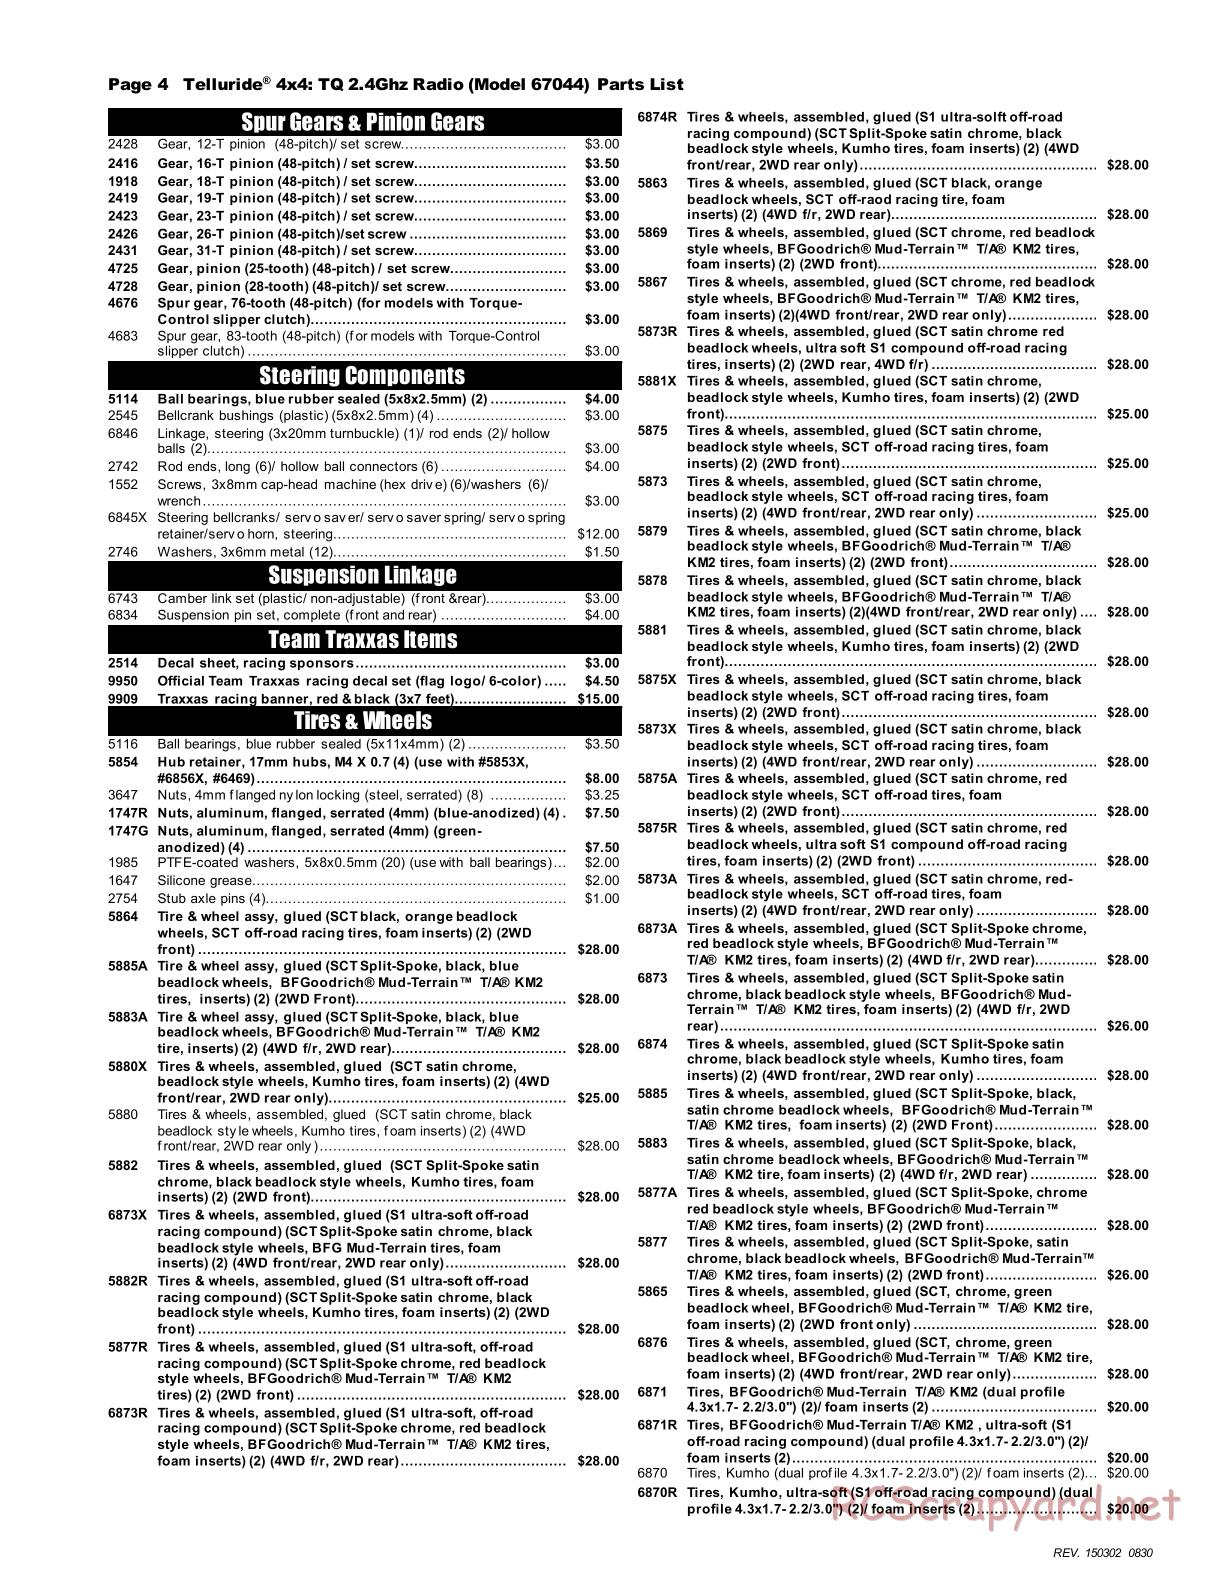 Traxxas - Telluride 4x4 (2013) - Parts List - Page 4